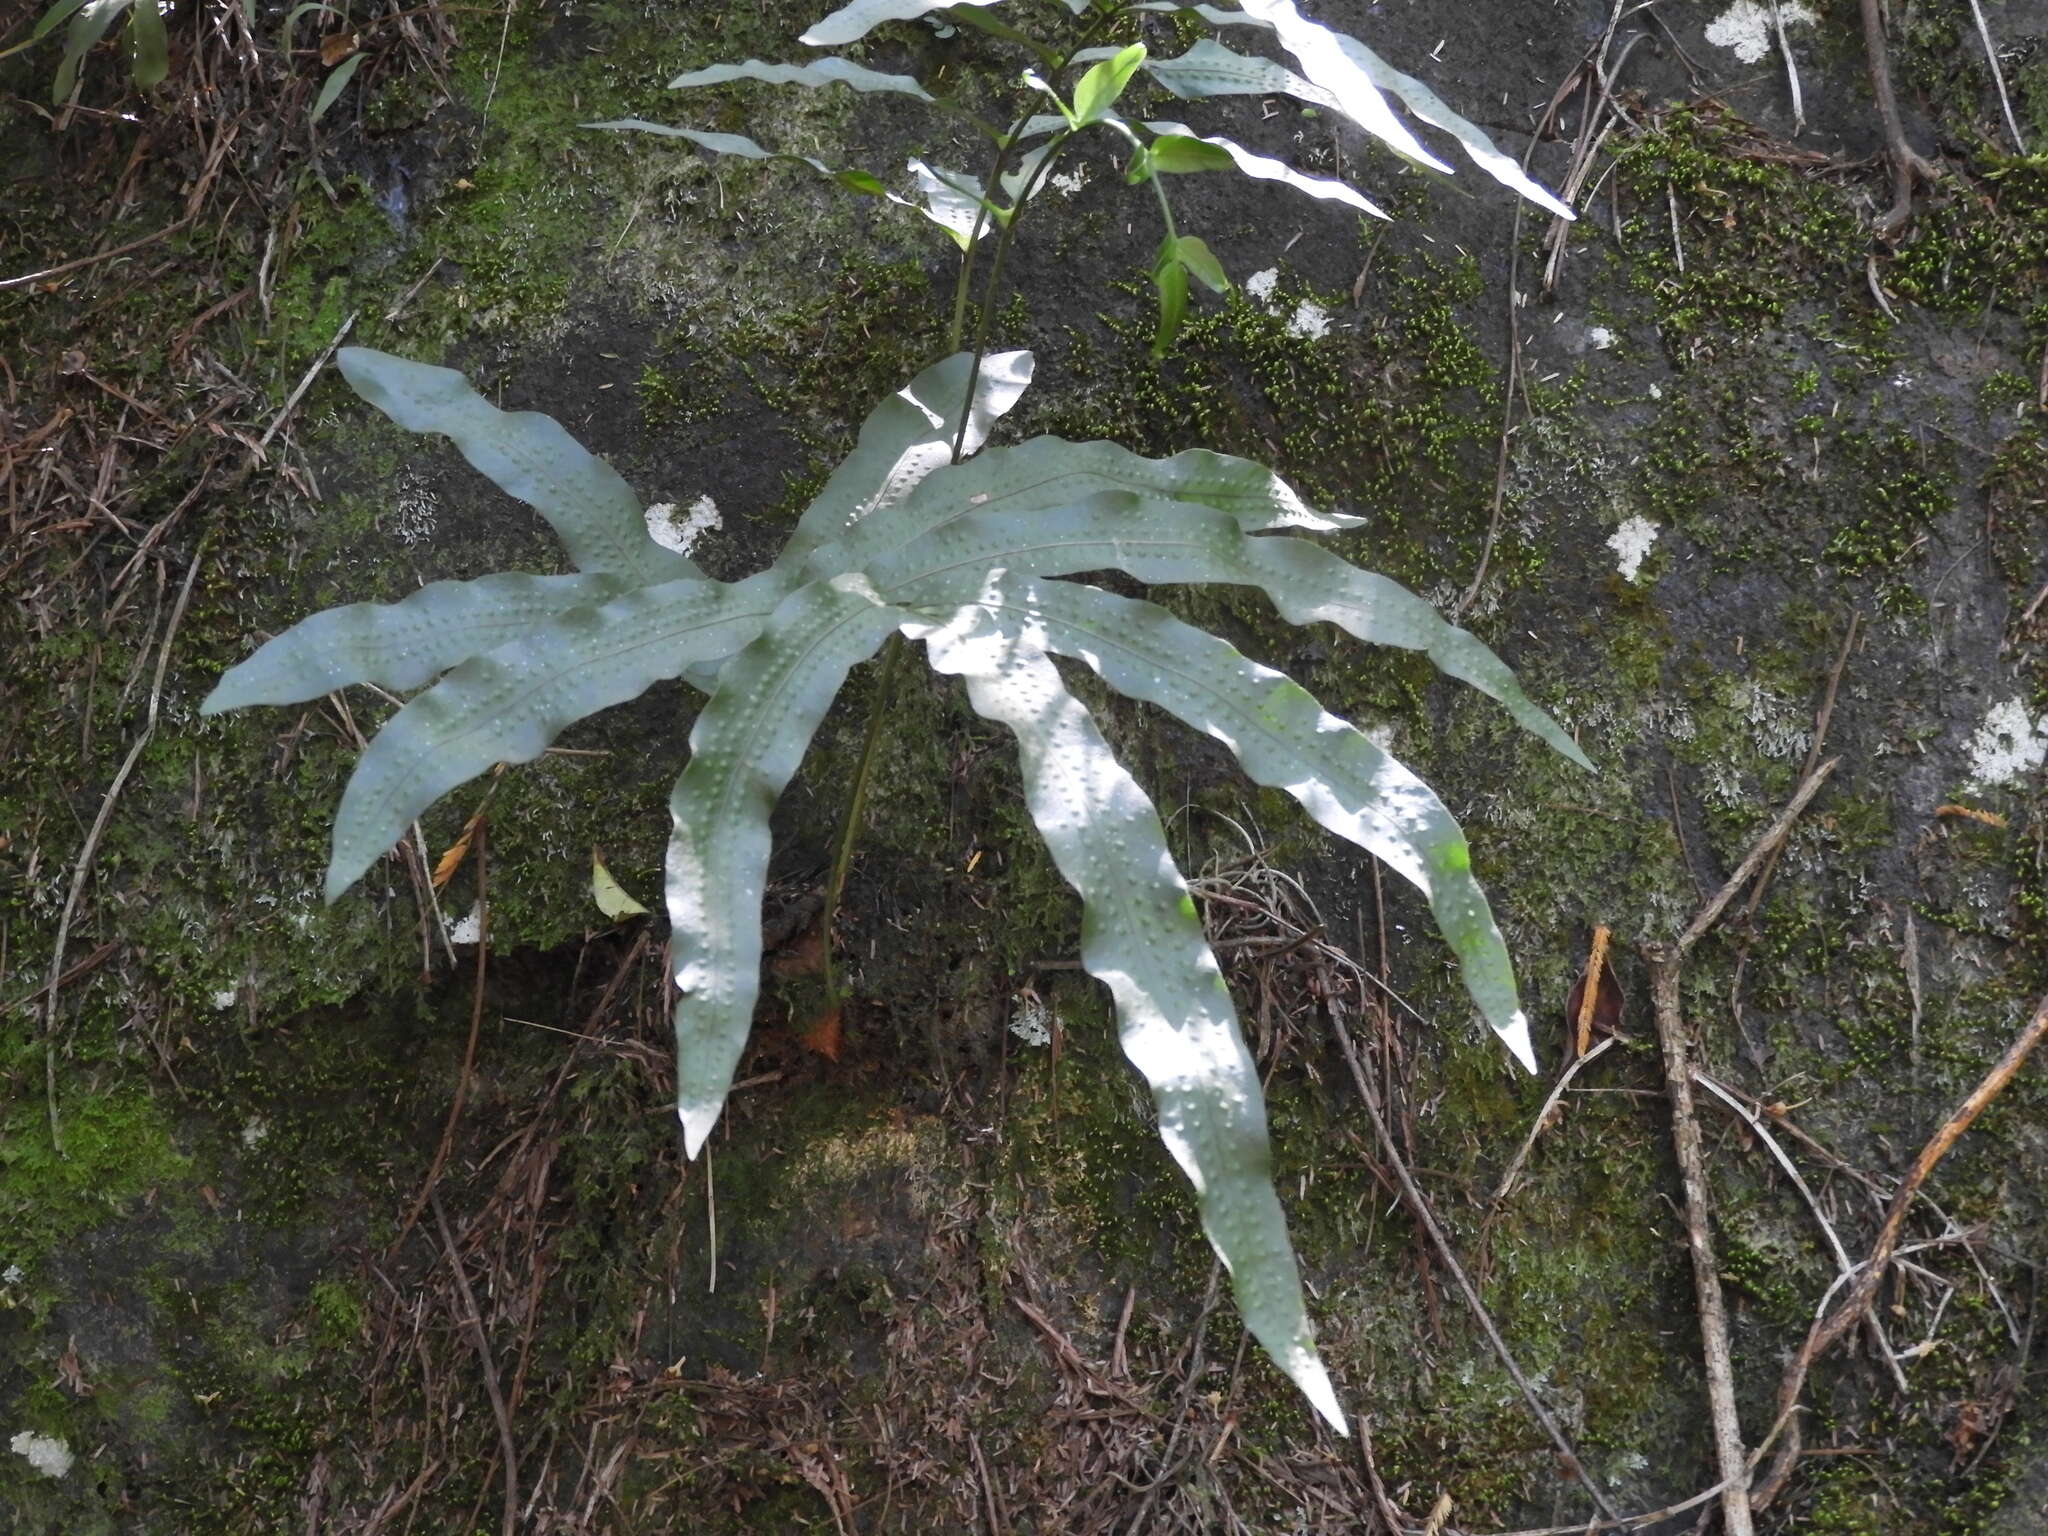 Image of anglevein fern